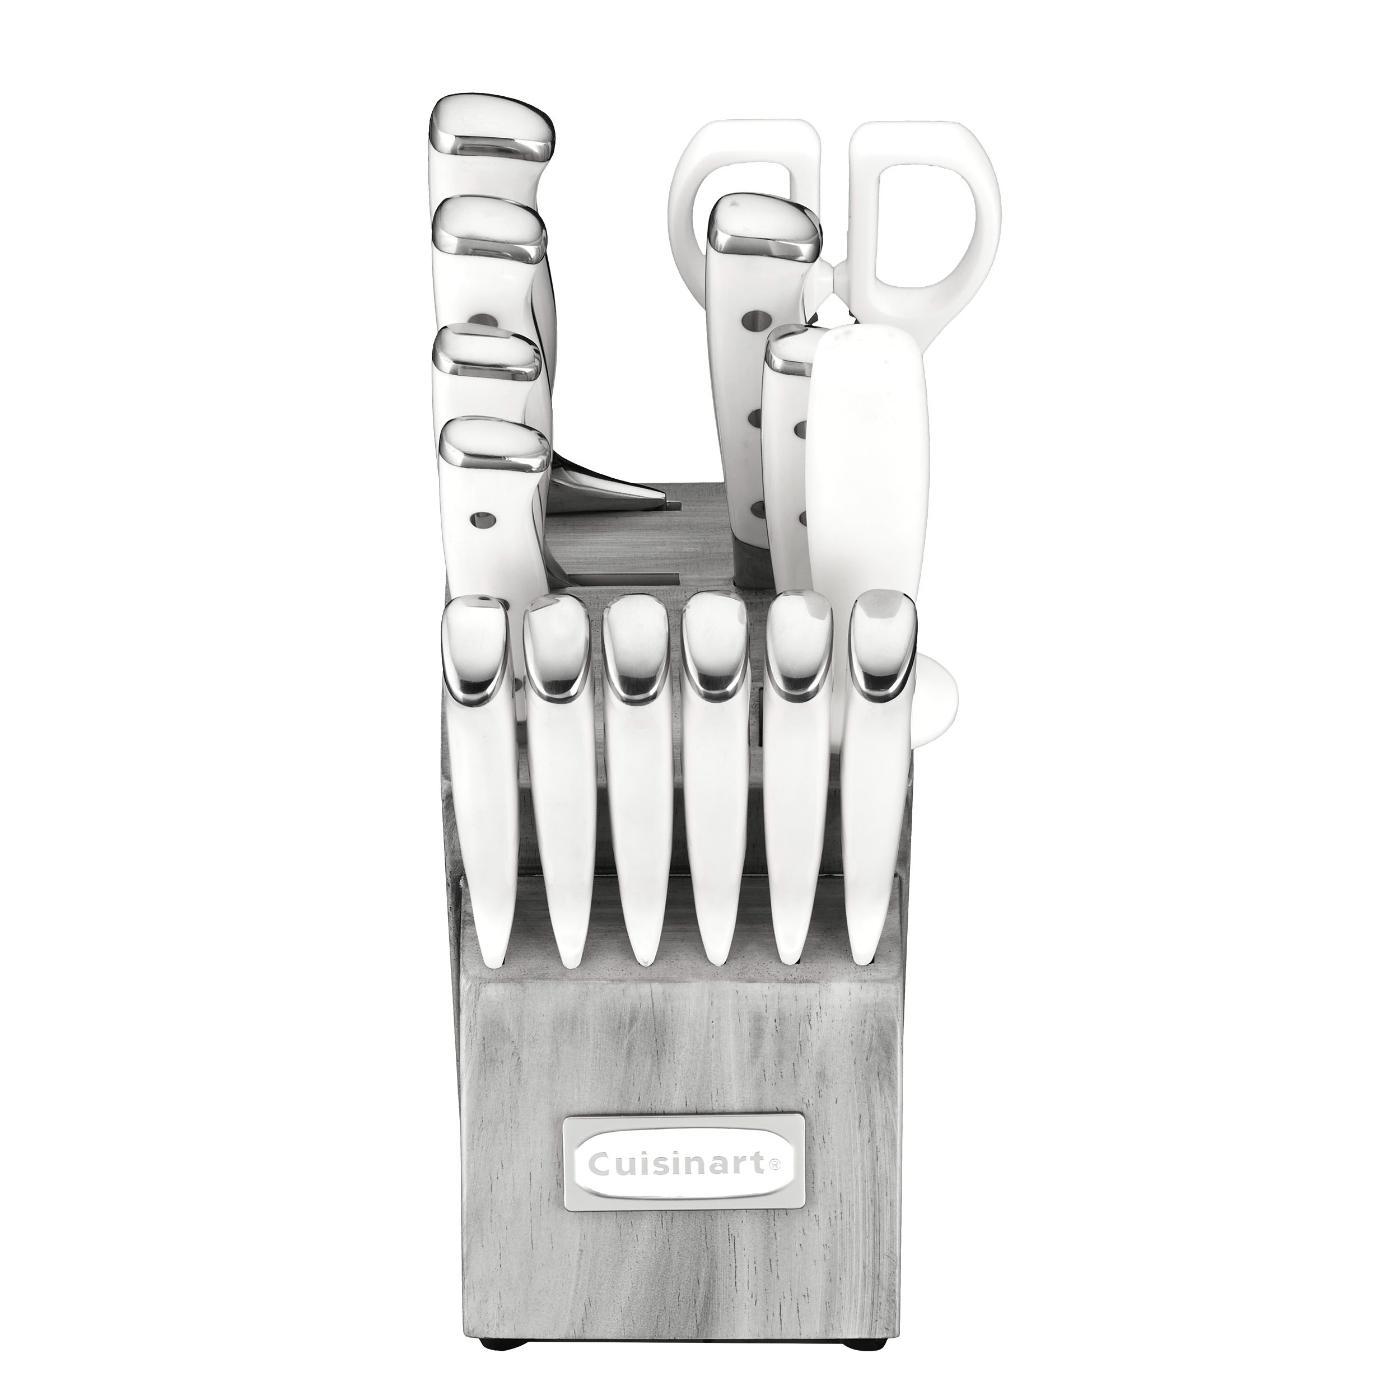 Set de cuchillos Cuisinart x 15